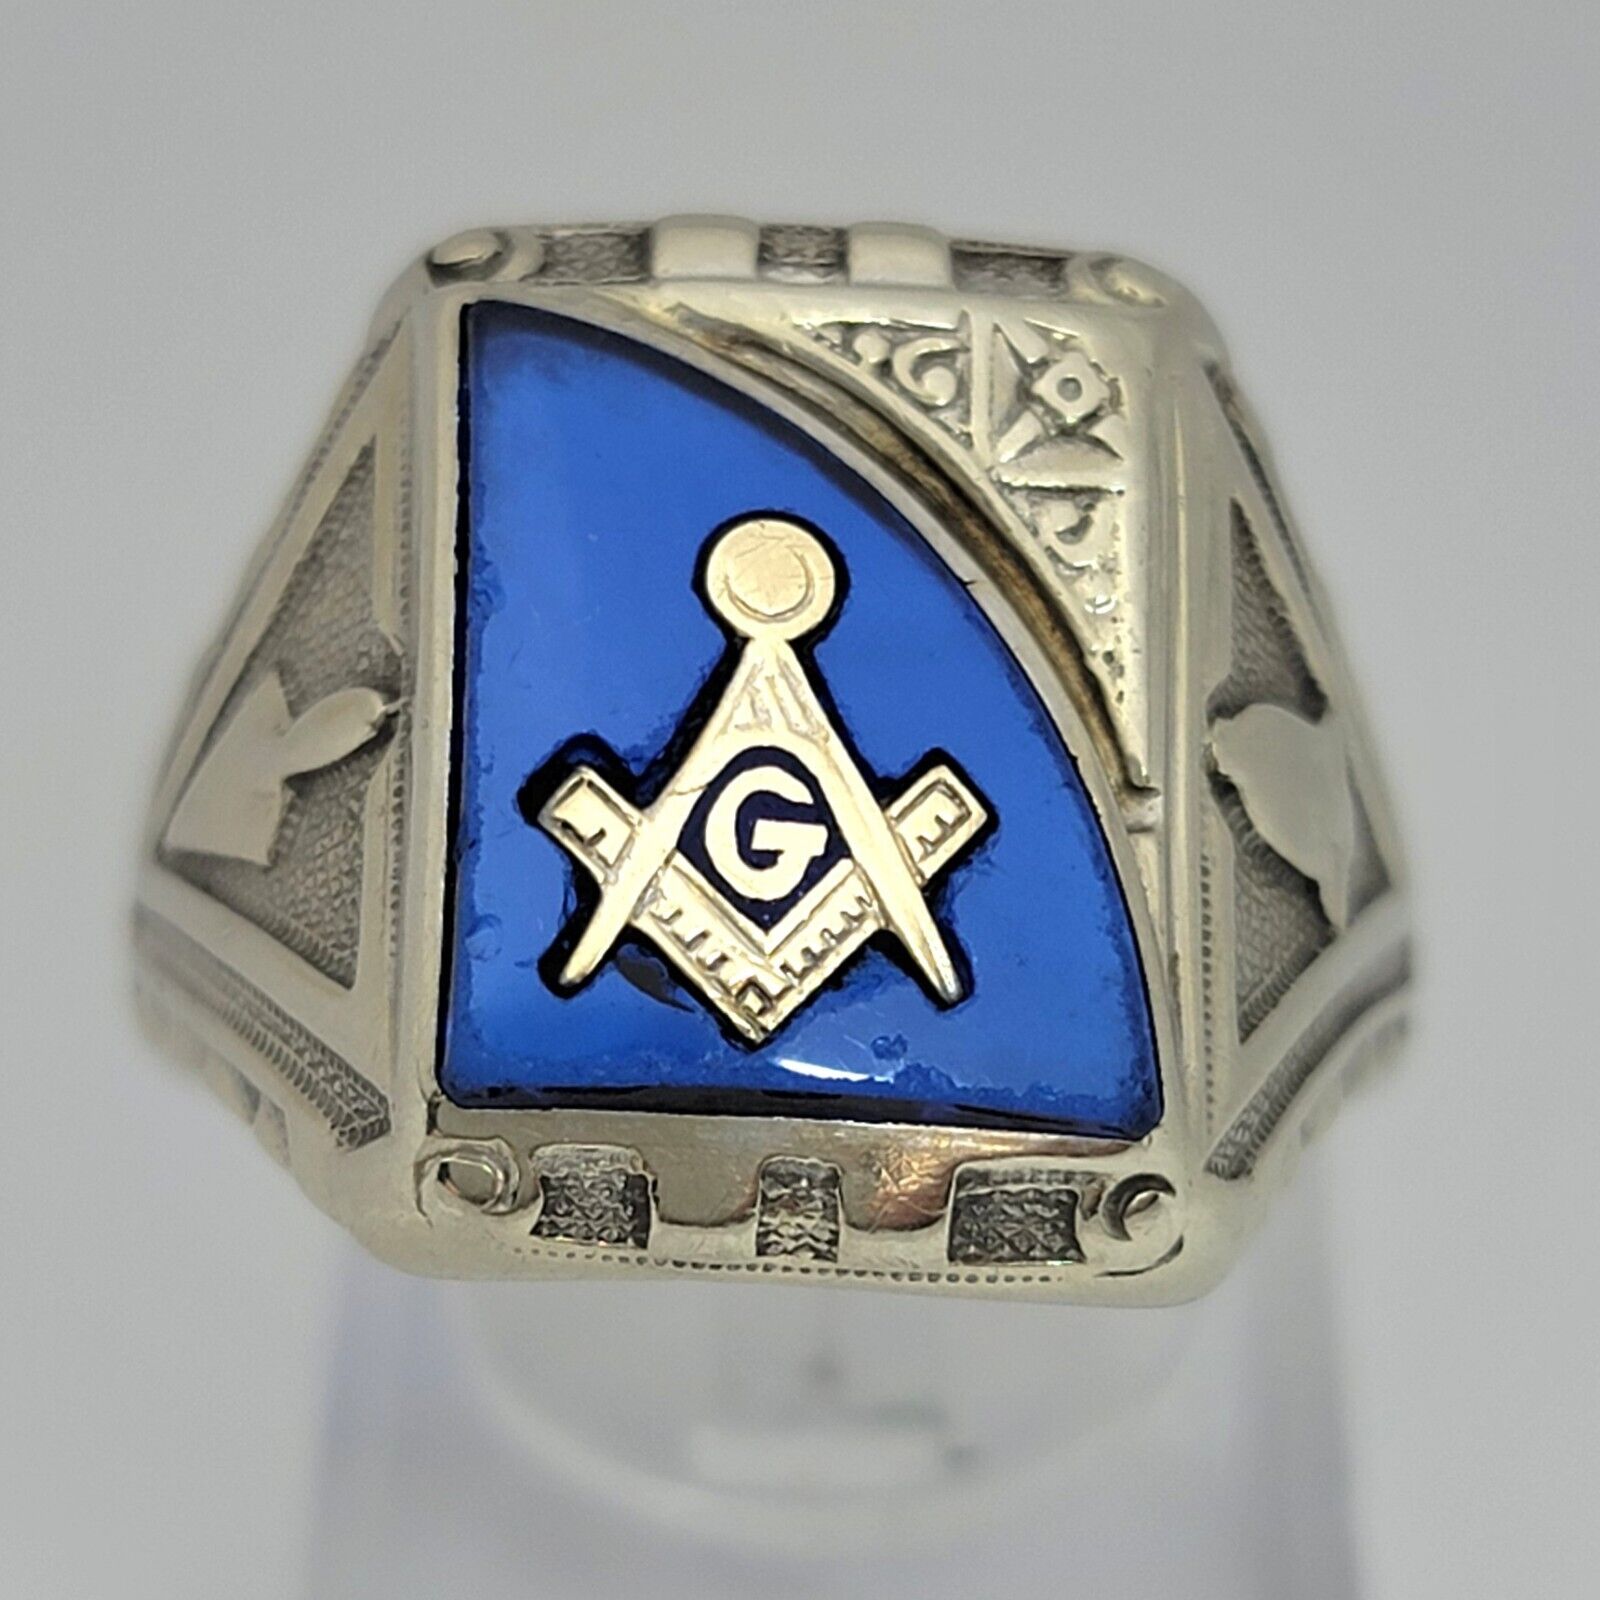 Vintage 10k White Gold Blue Spinel Masonic Ring Size 11 - 6.4gr Signed Gothic